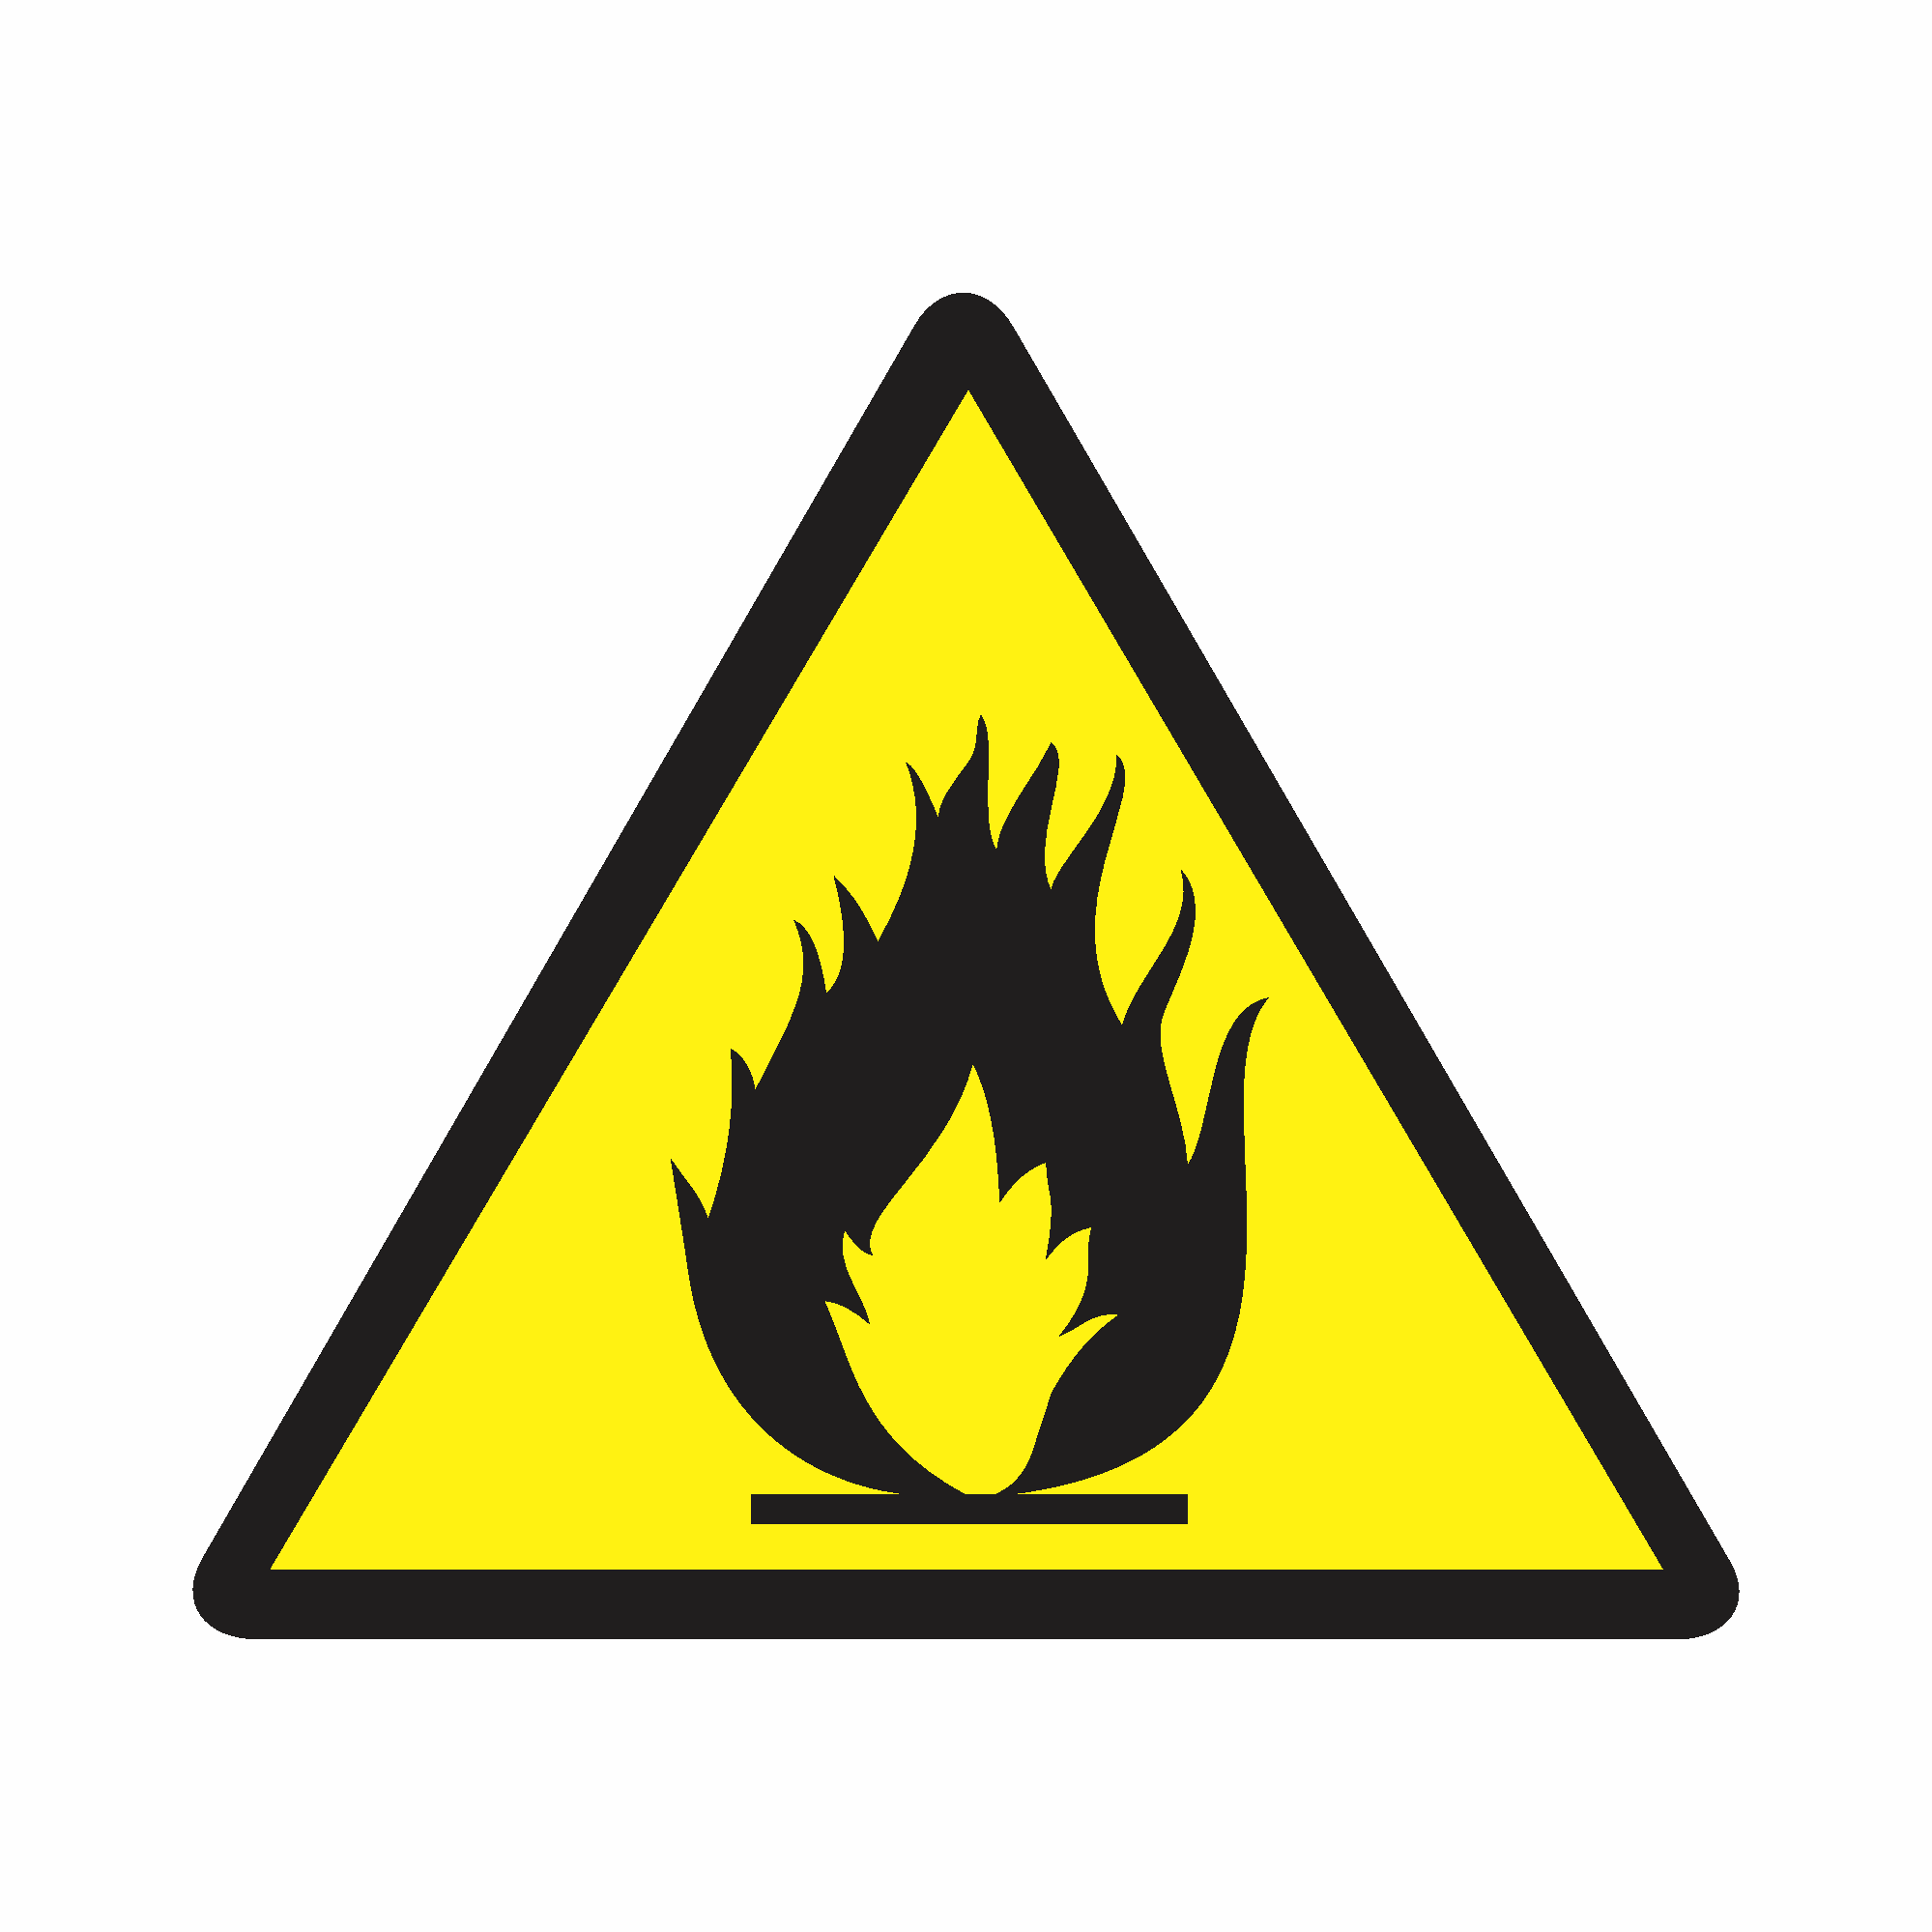 A2 - Cuidado, risco de incêndio